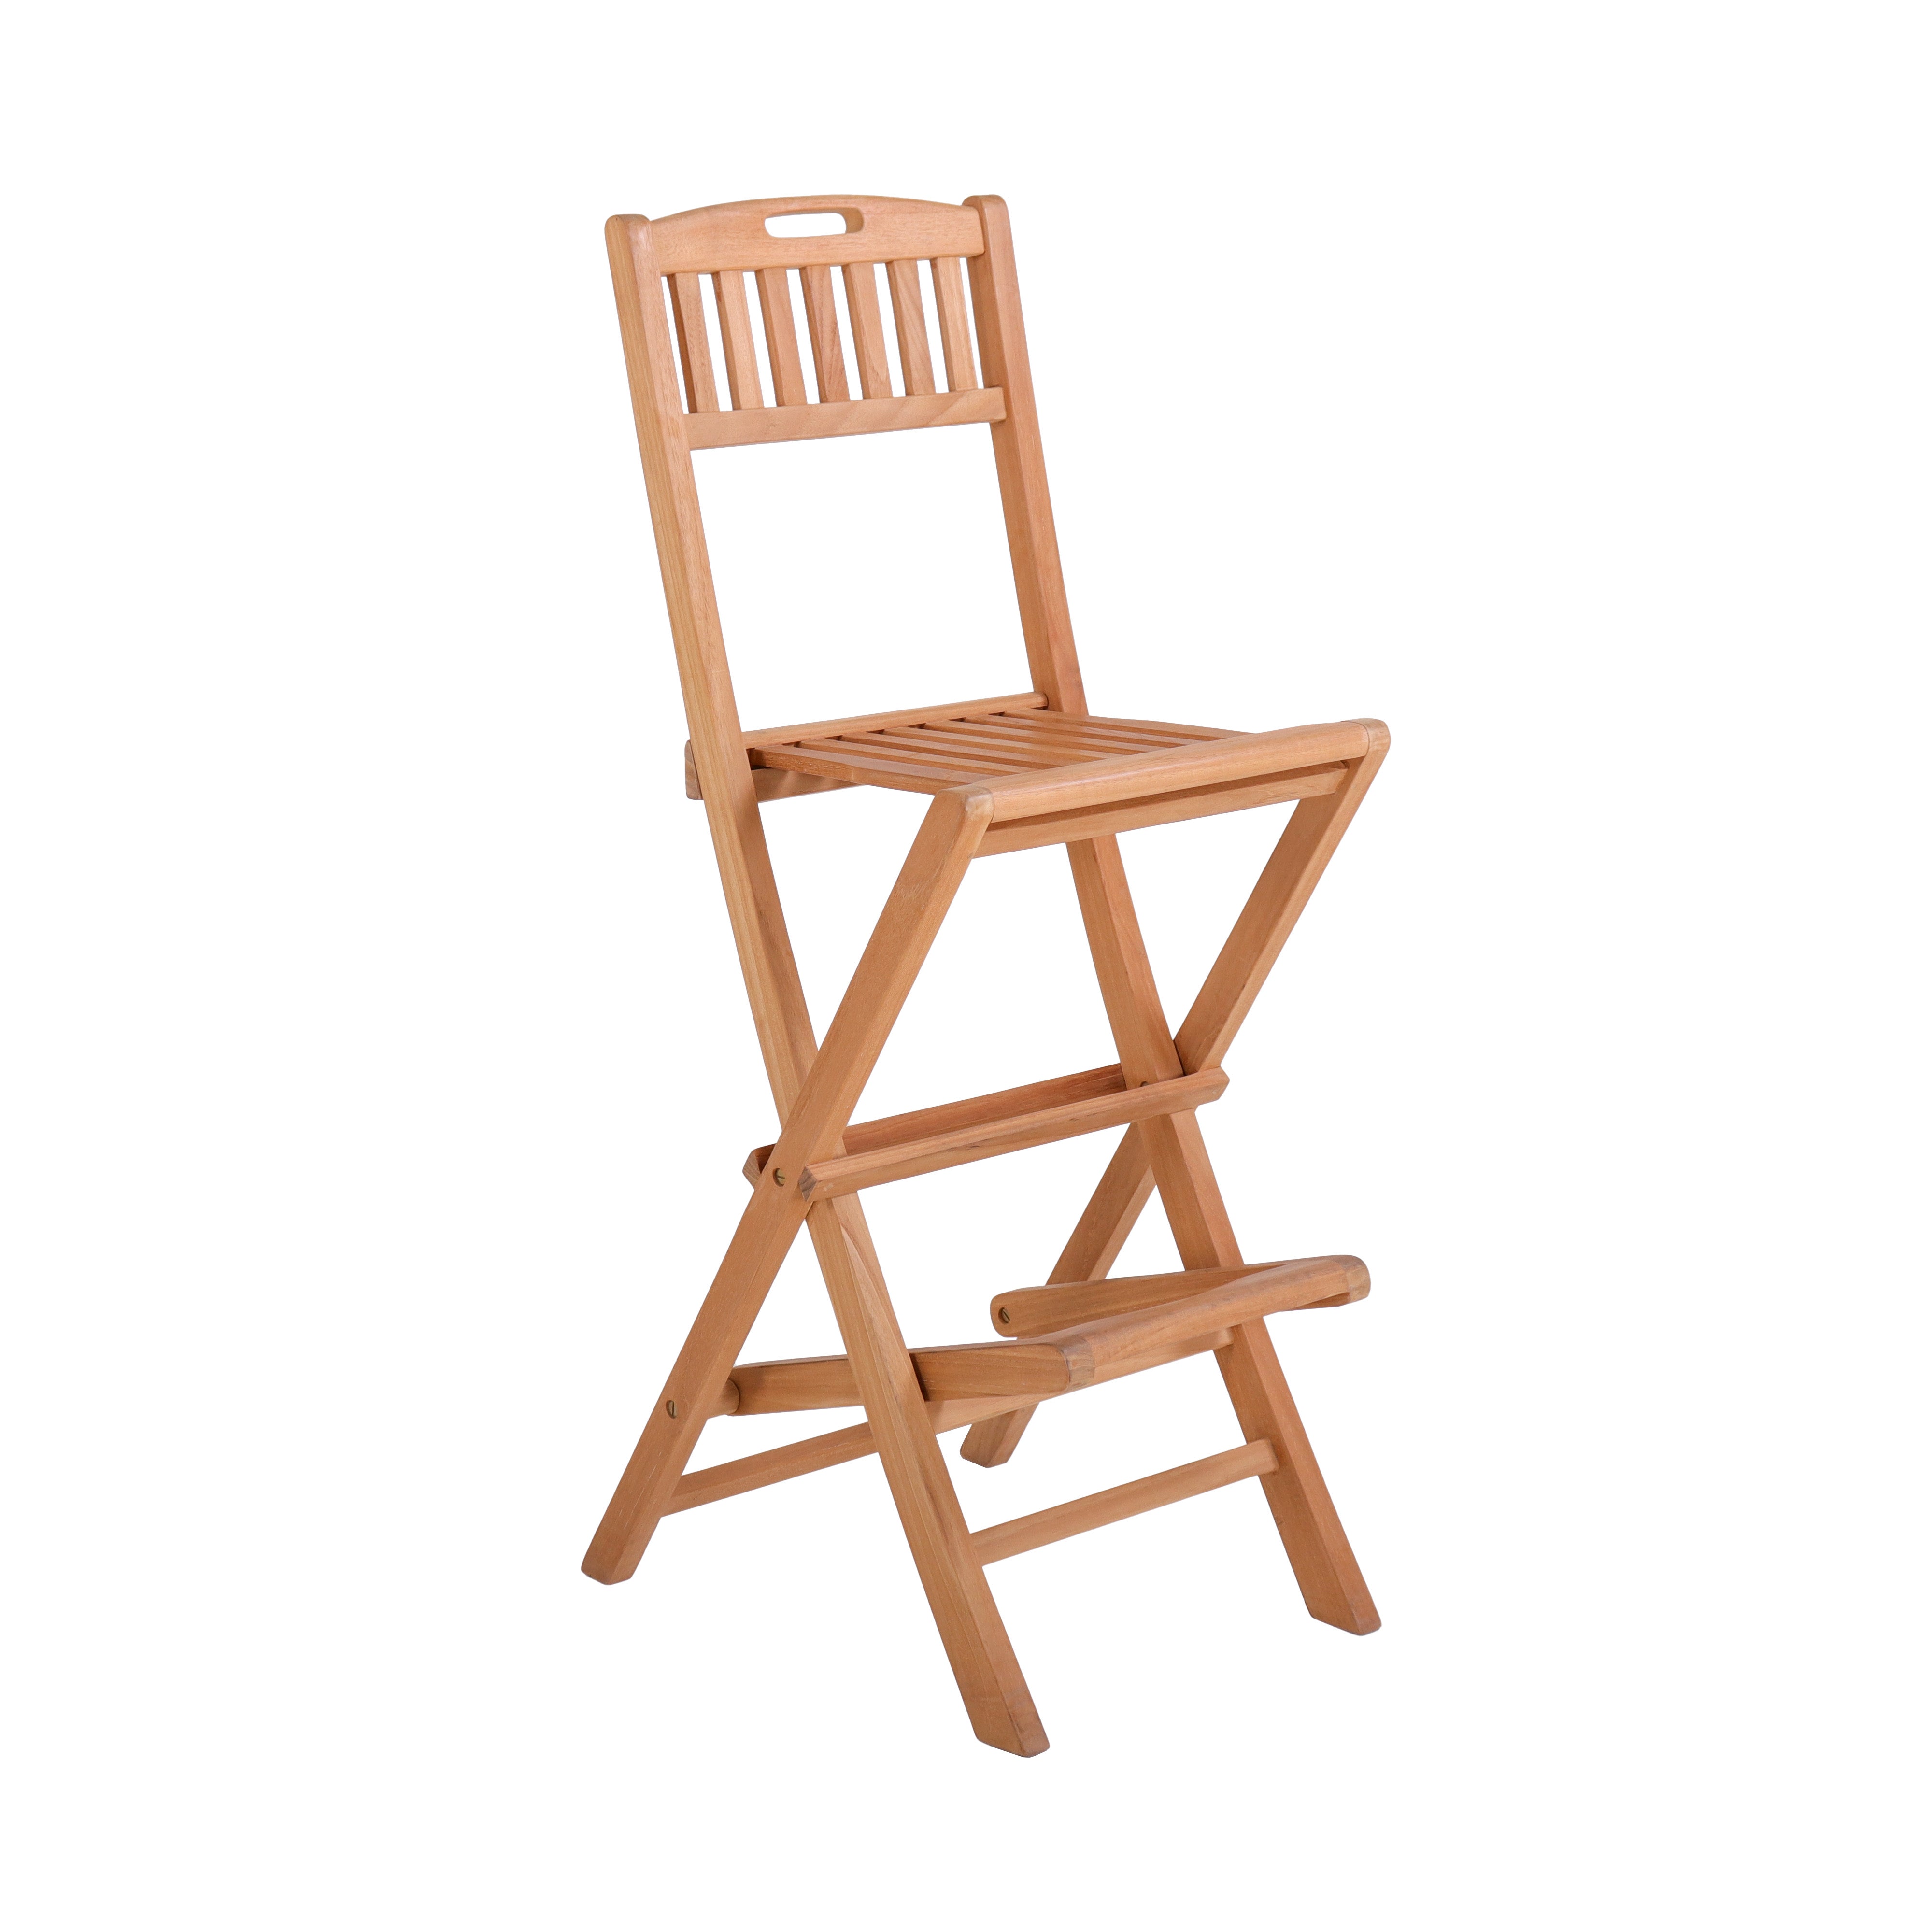 AGAGSHJDJDJJ FSGHSHDJDJKGKGK?!?!?!???! - Well Oiled Folding Chair